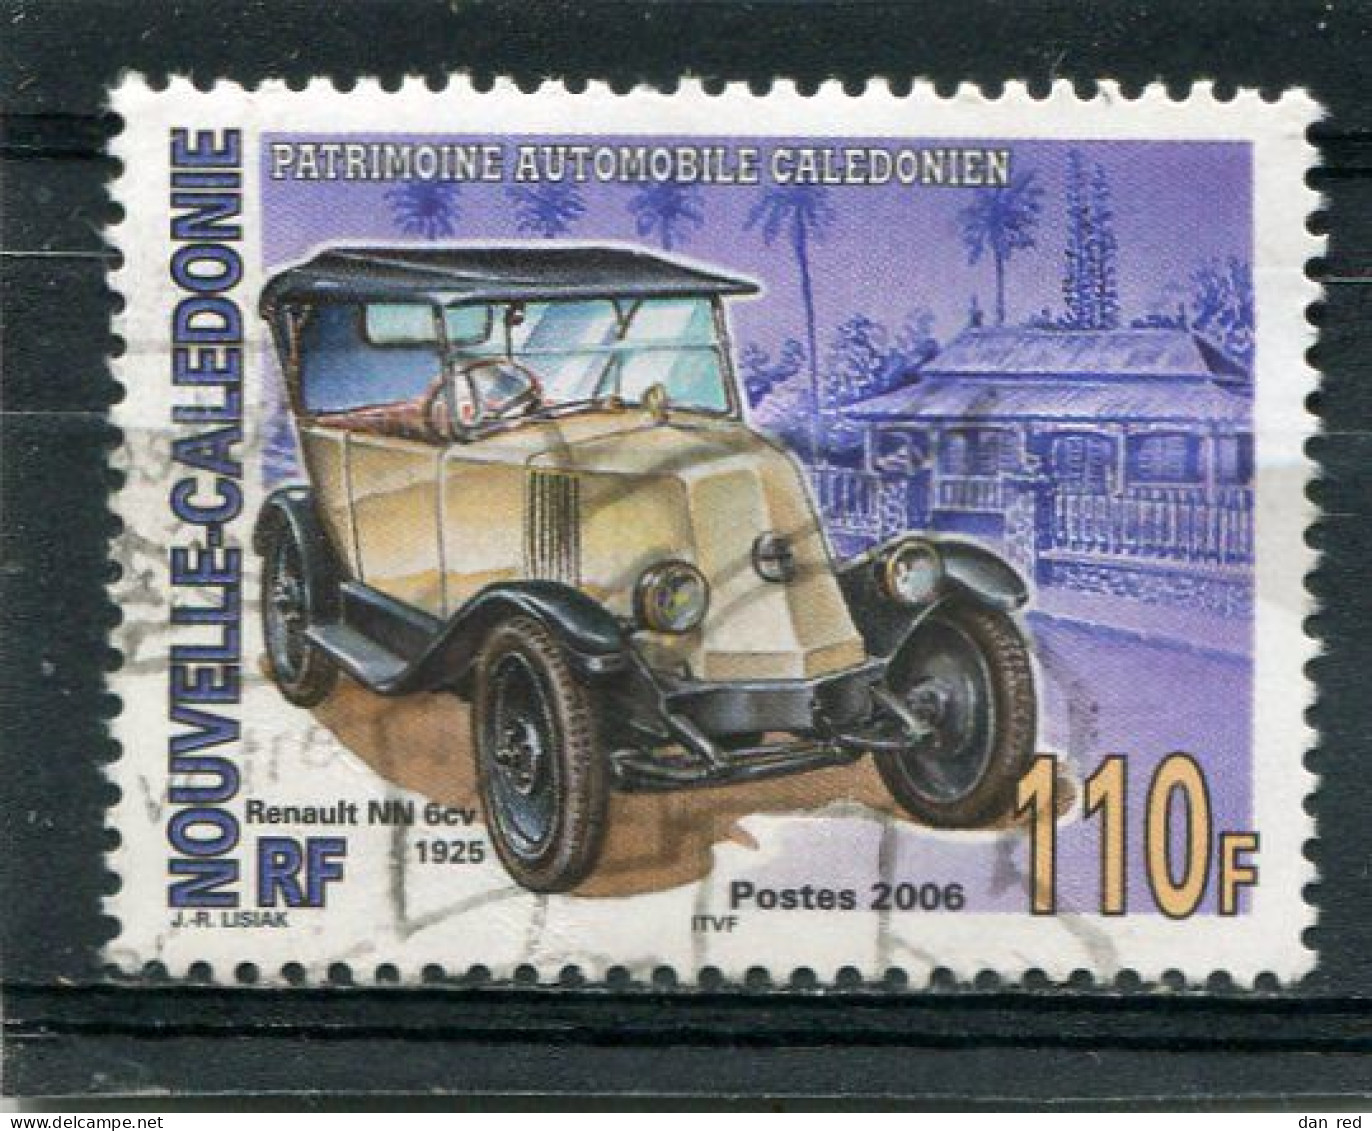 NOUVELLE CALEDONIE  N°  971  (Y&T)  (Oblitéré) - Used Stamps